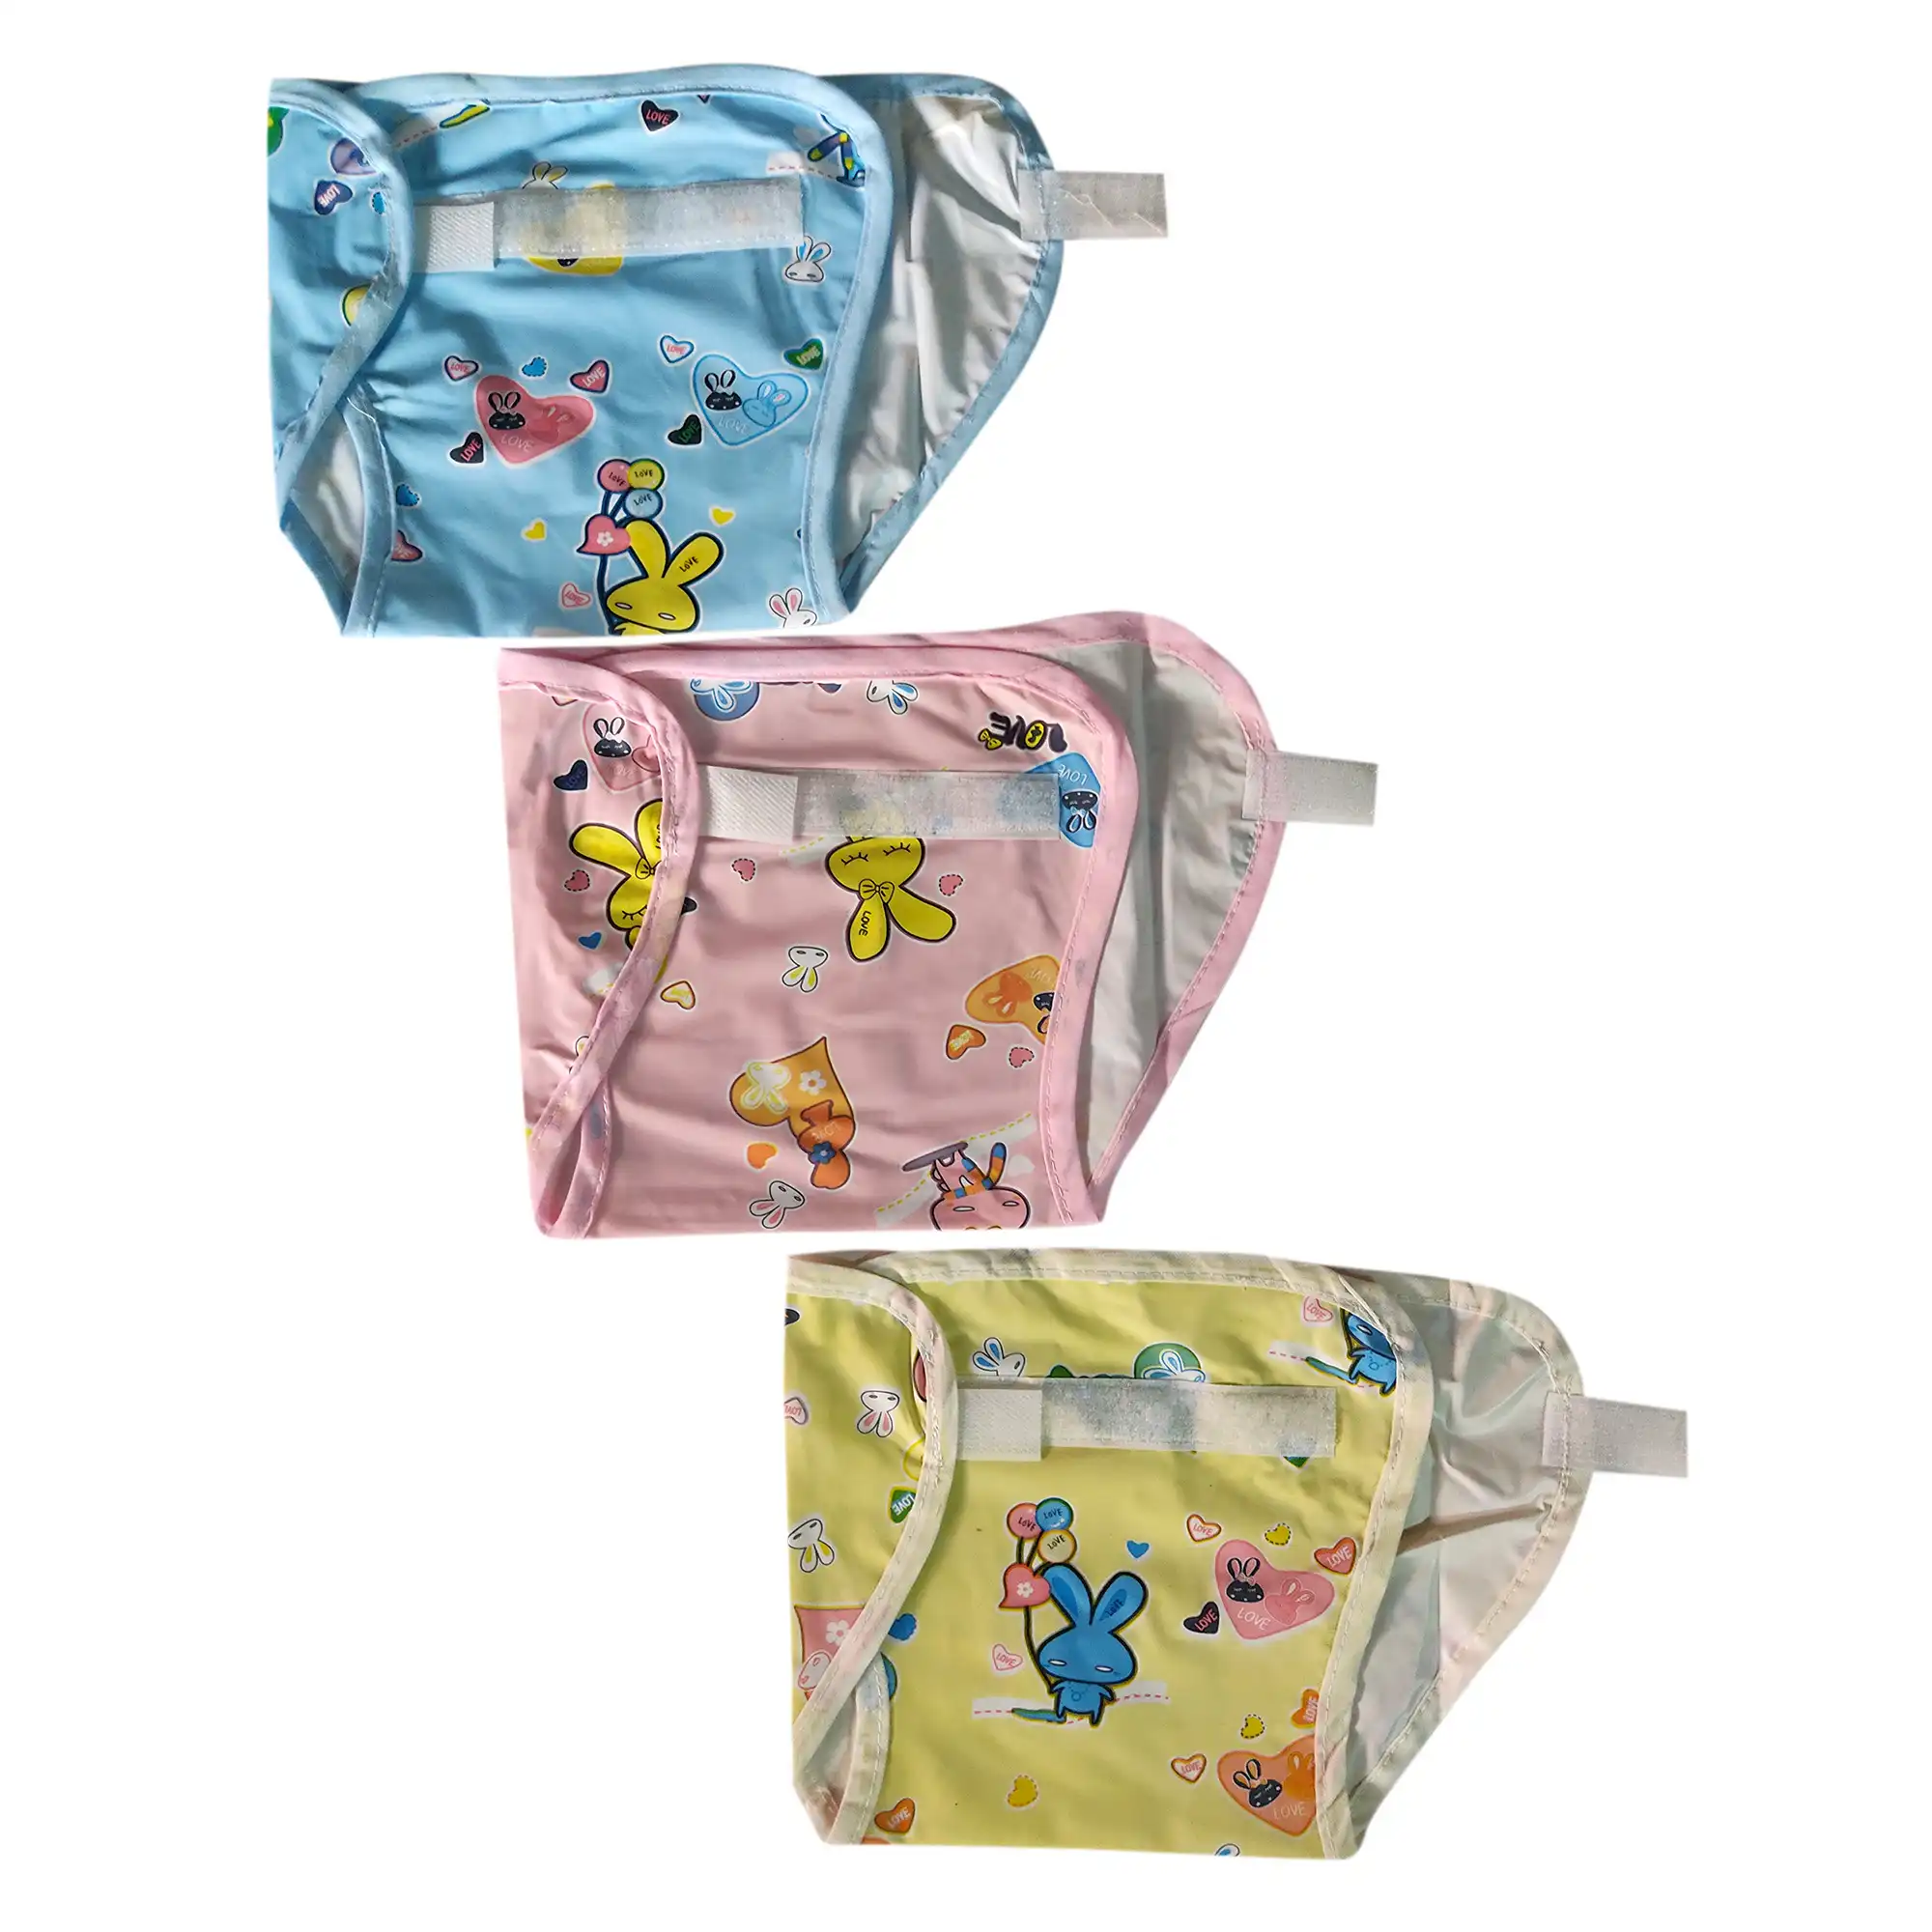 Newborn Plastic Baby Diapers Set of 3 2